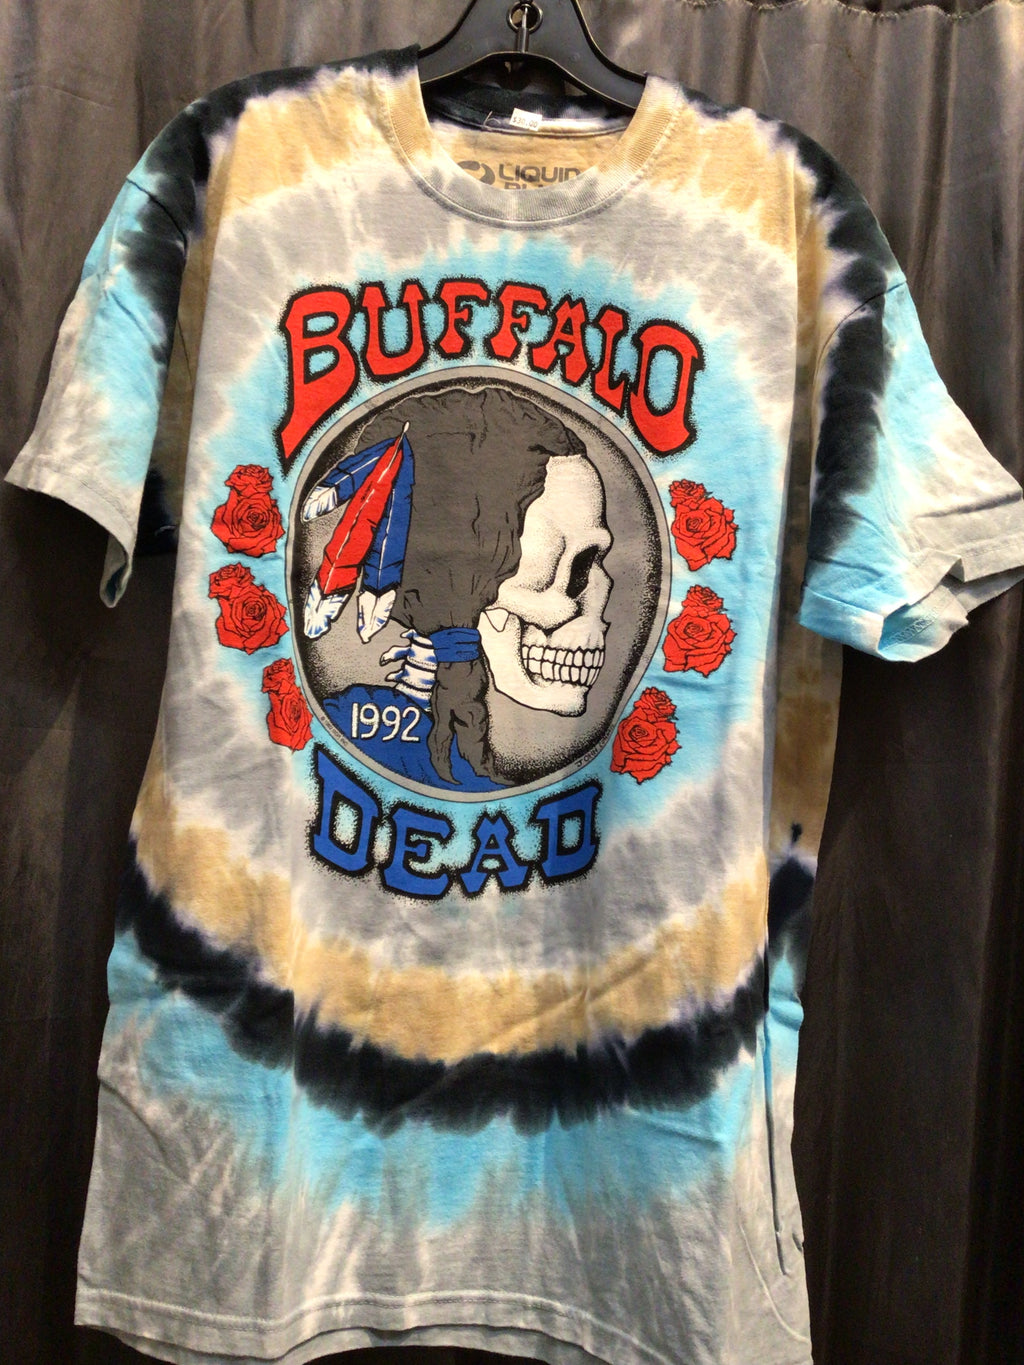 Buffalo Dead 1992